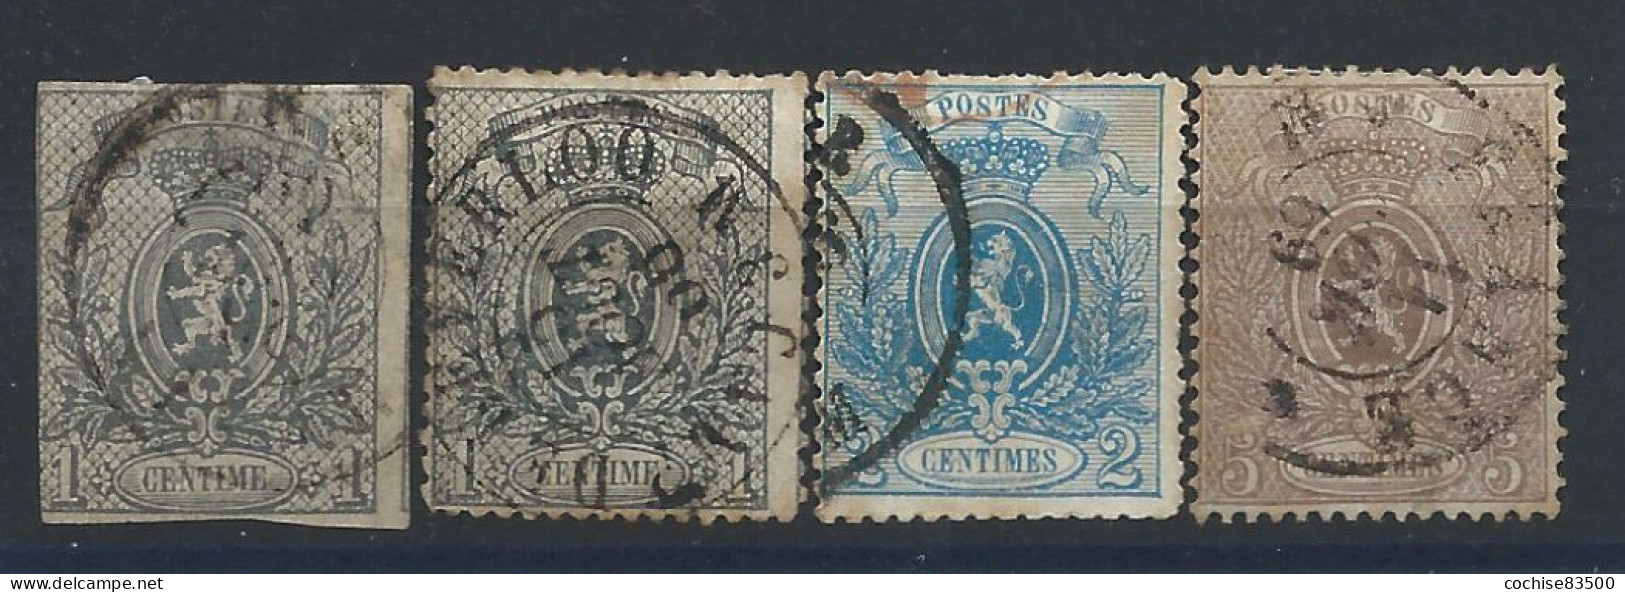 Belgique N°22/25 Obl (FU) 1866/67 - Armoiries - 1866-1867 Coat Of Arms